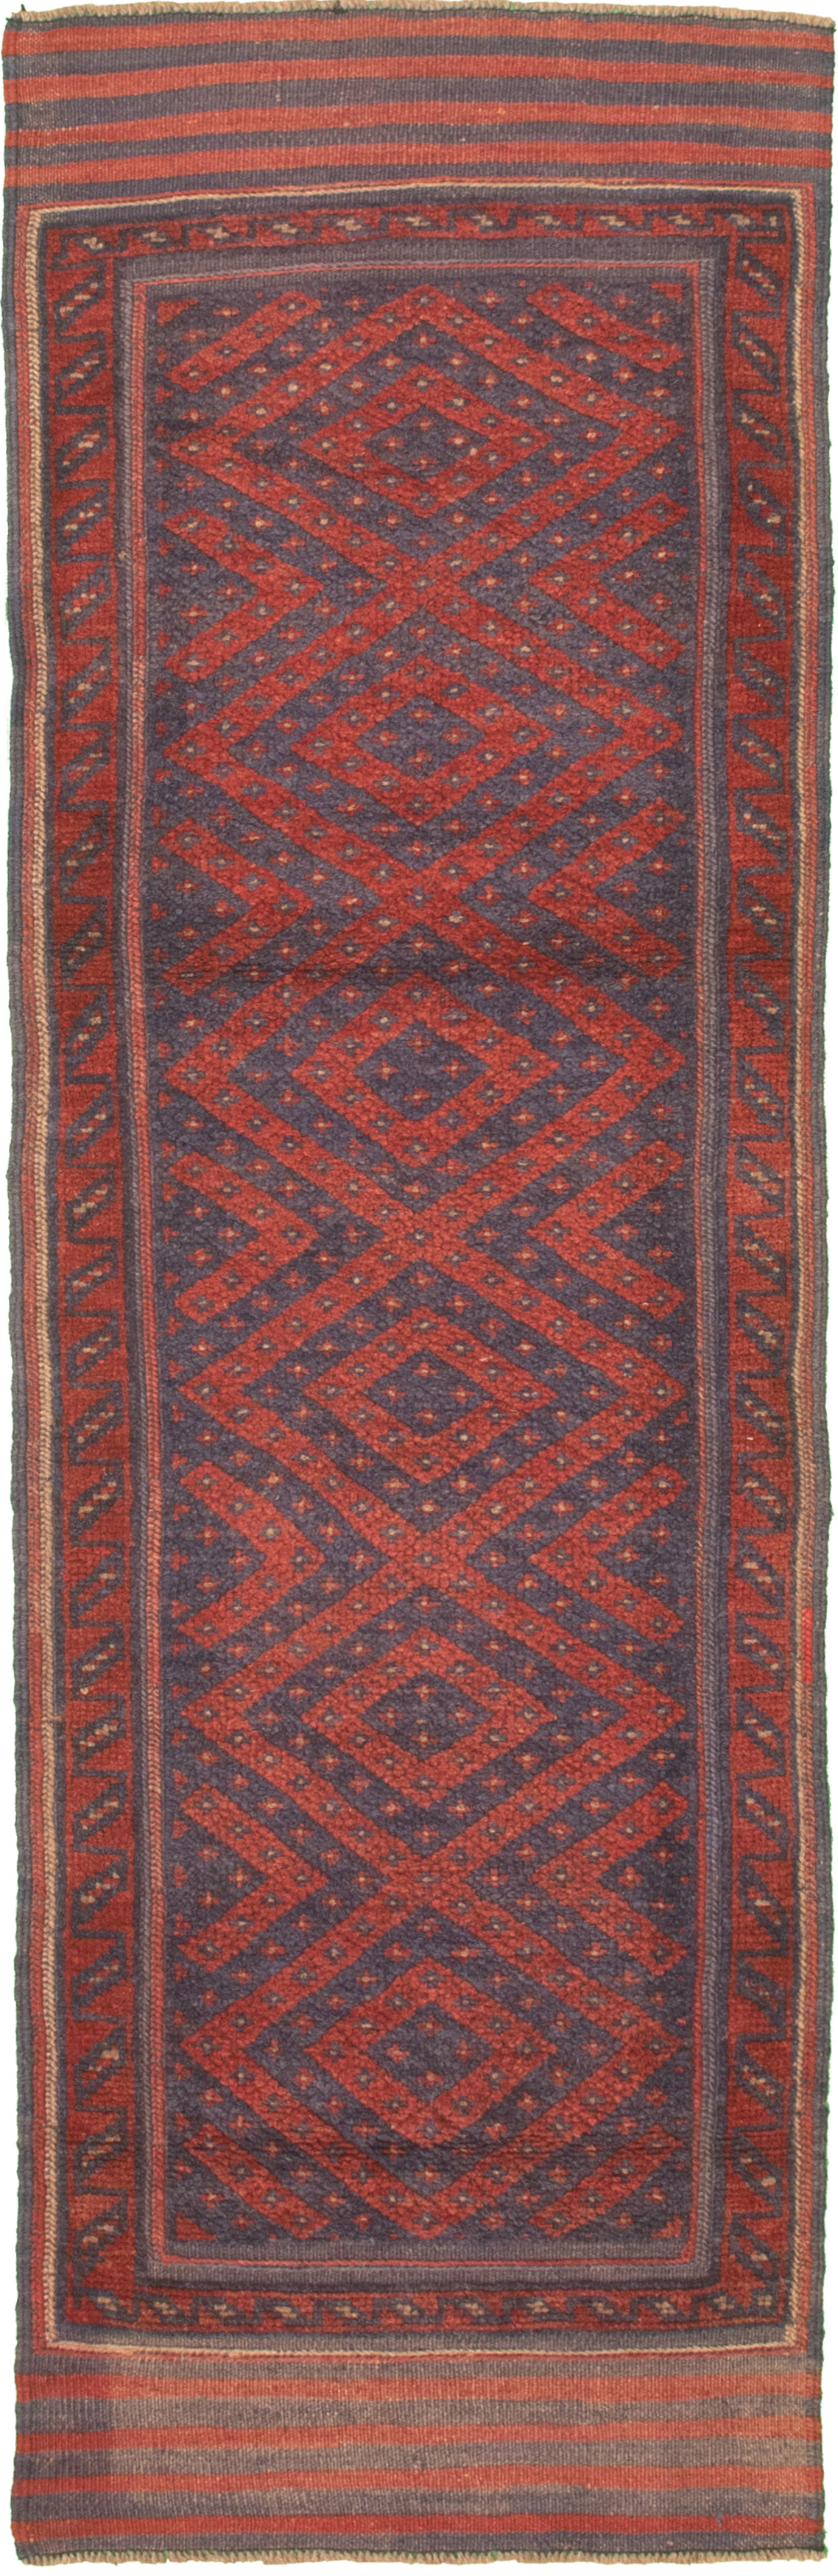 Hand-knotted Tajik Caucasian Red Wool Rug 2'2" x 7'7"  Size: 2'2" x 7'7"  